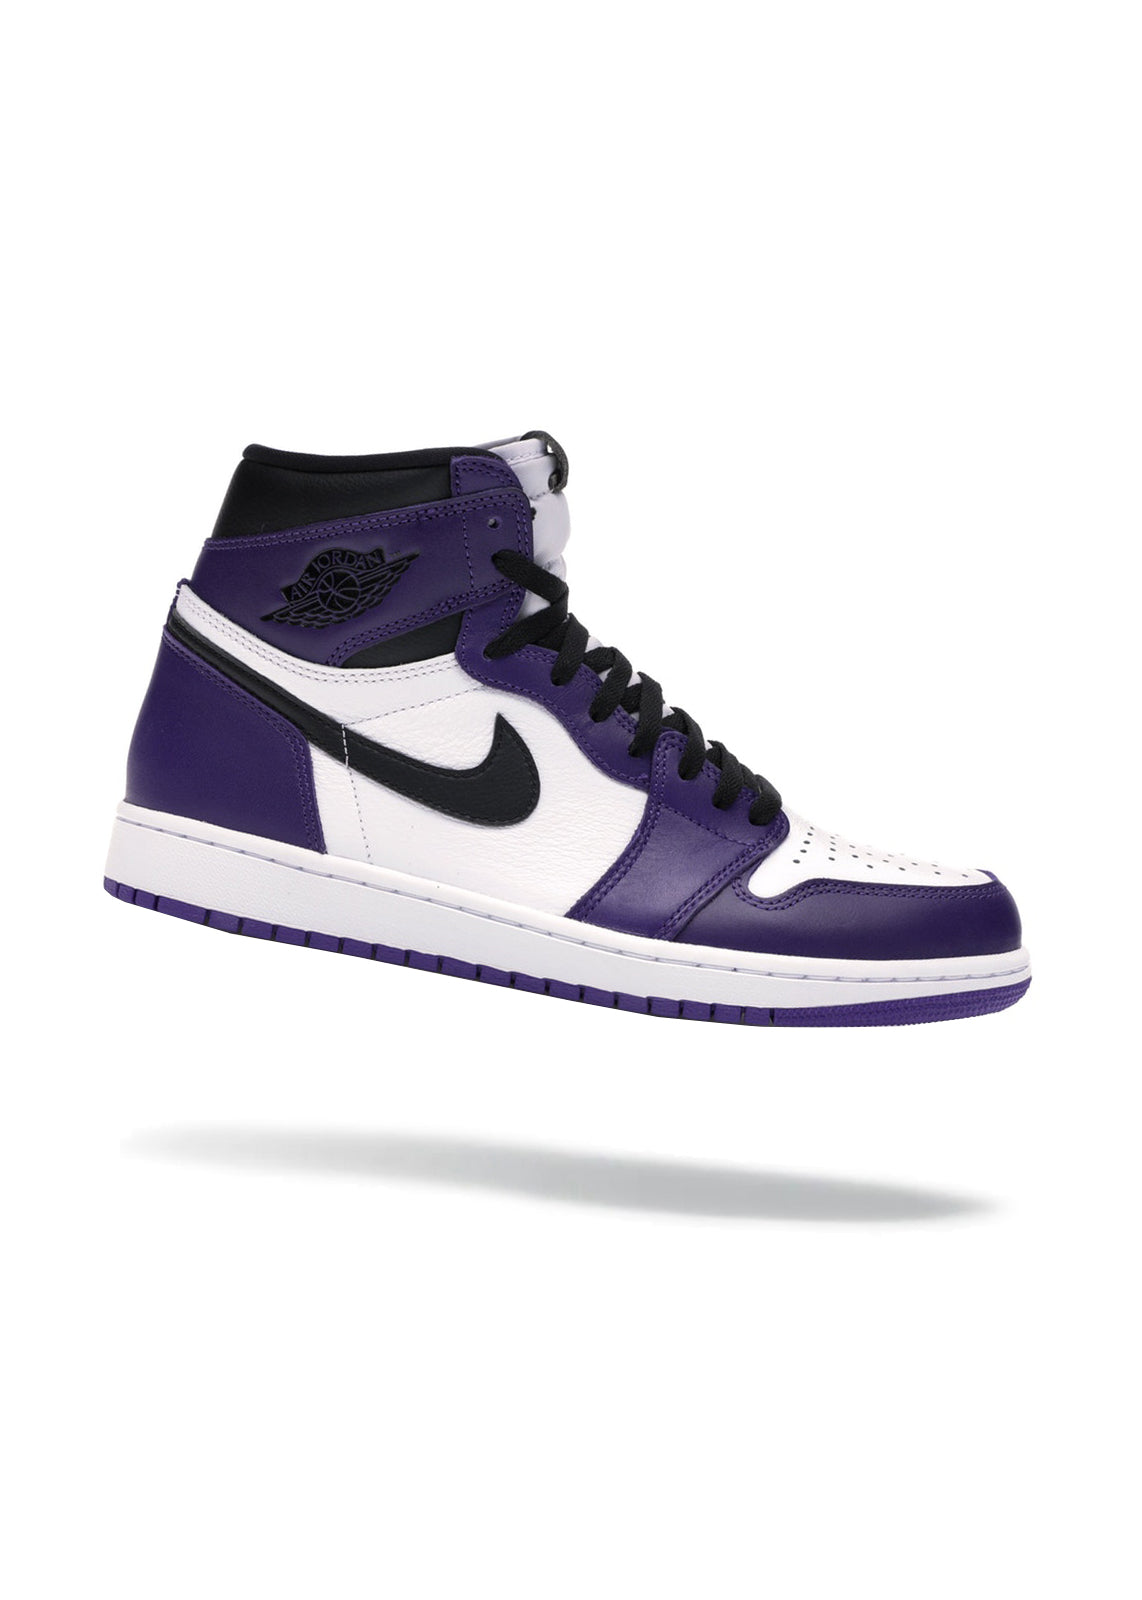 Jordan 1 high Purple court 2.0